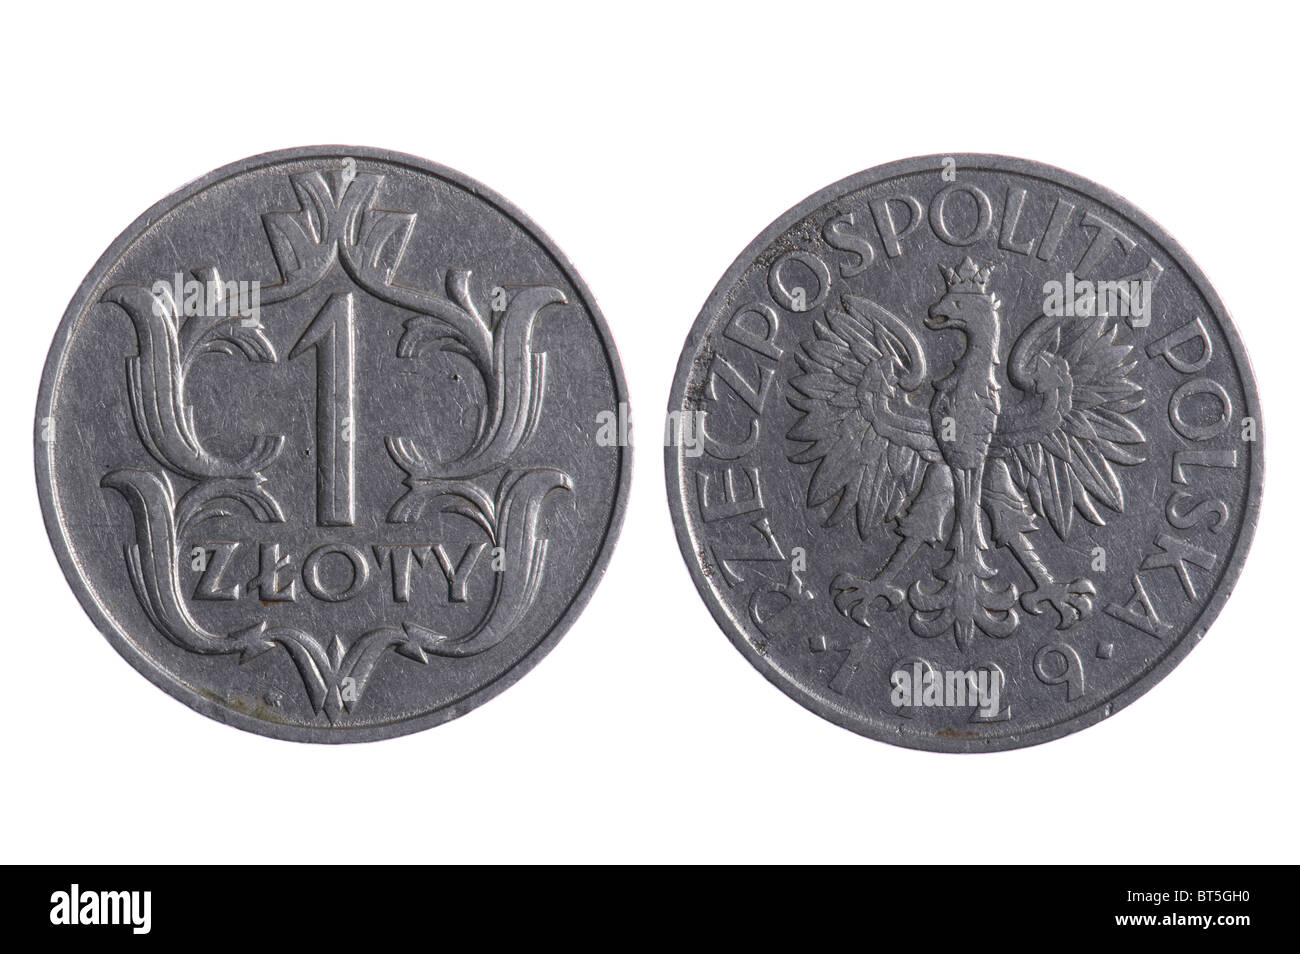 object on white - Polska coins close up Stock Photo